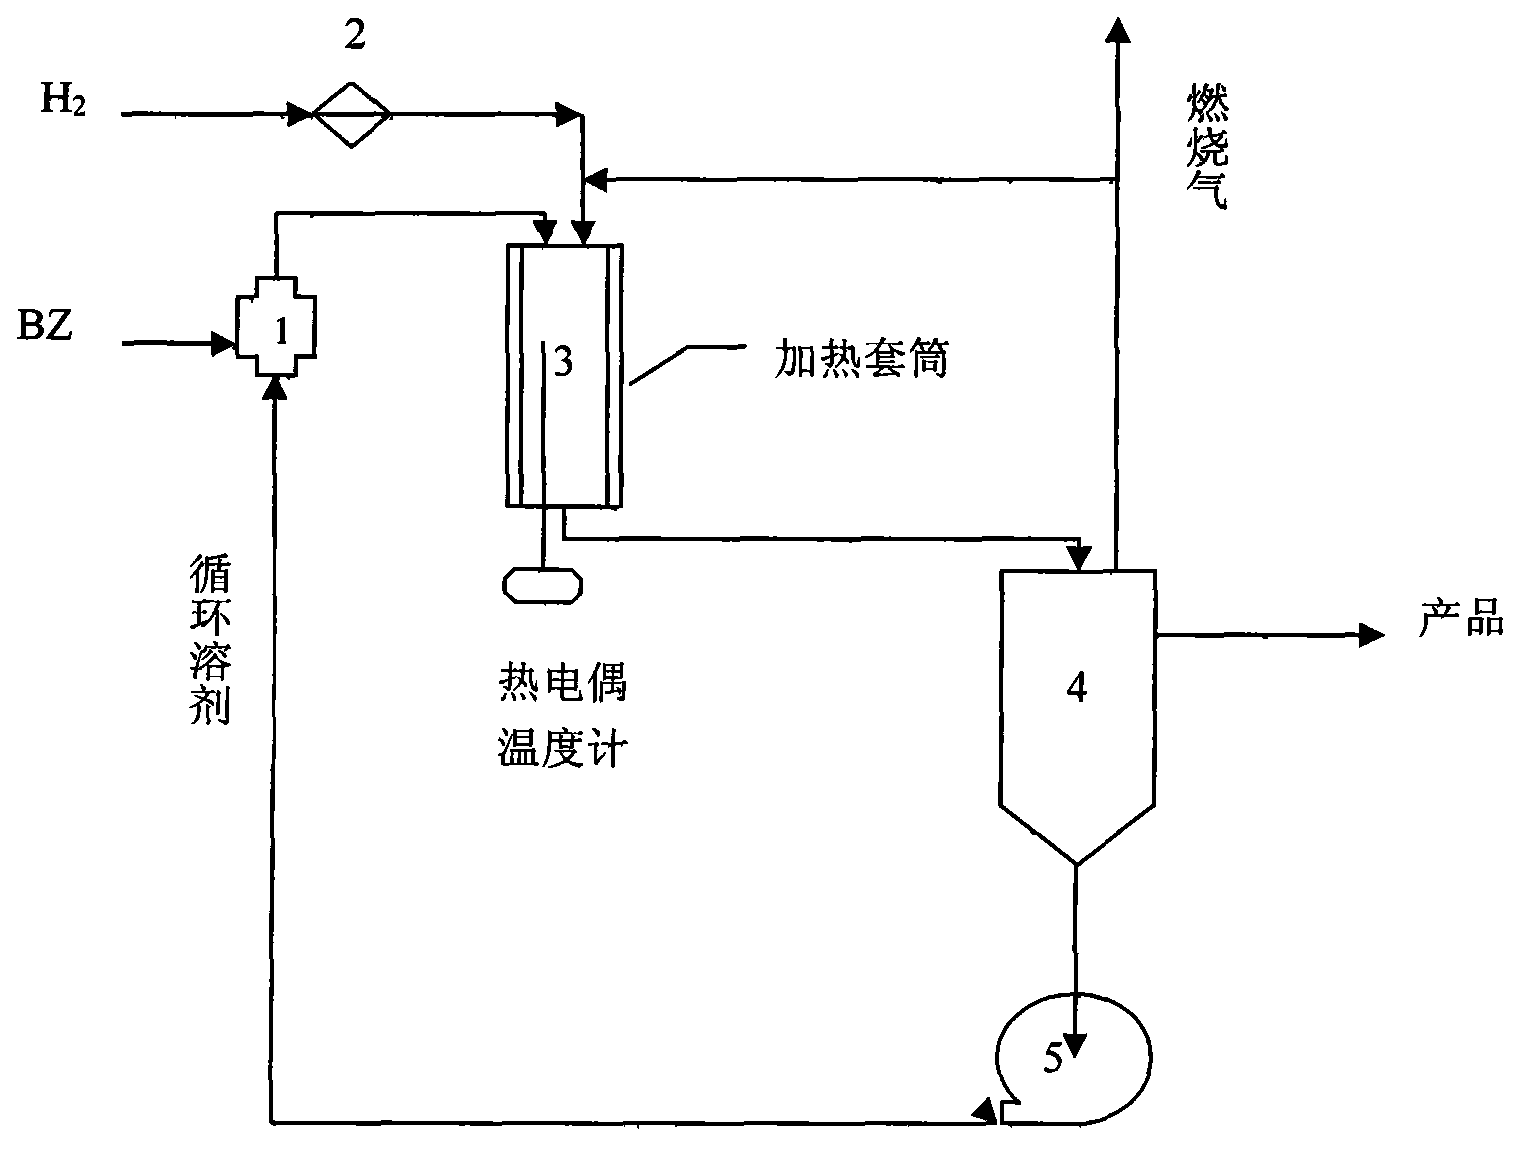 Preparation method of cyclohexene catalyst, as well as preparation method and device of cyclohexene